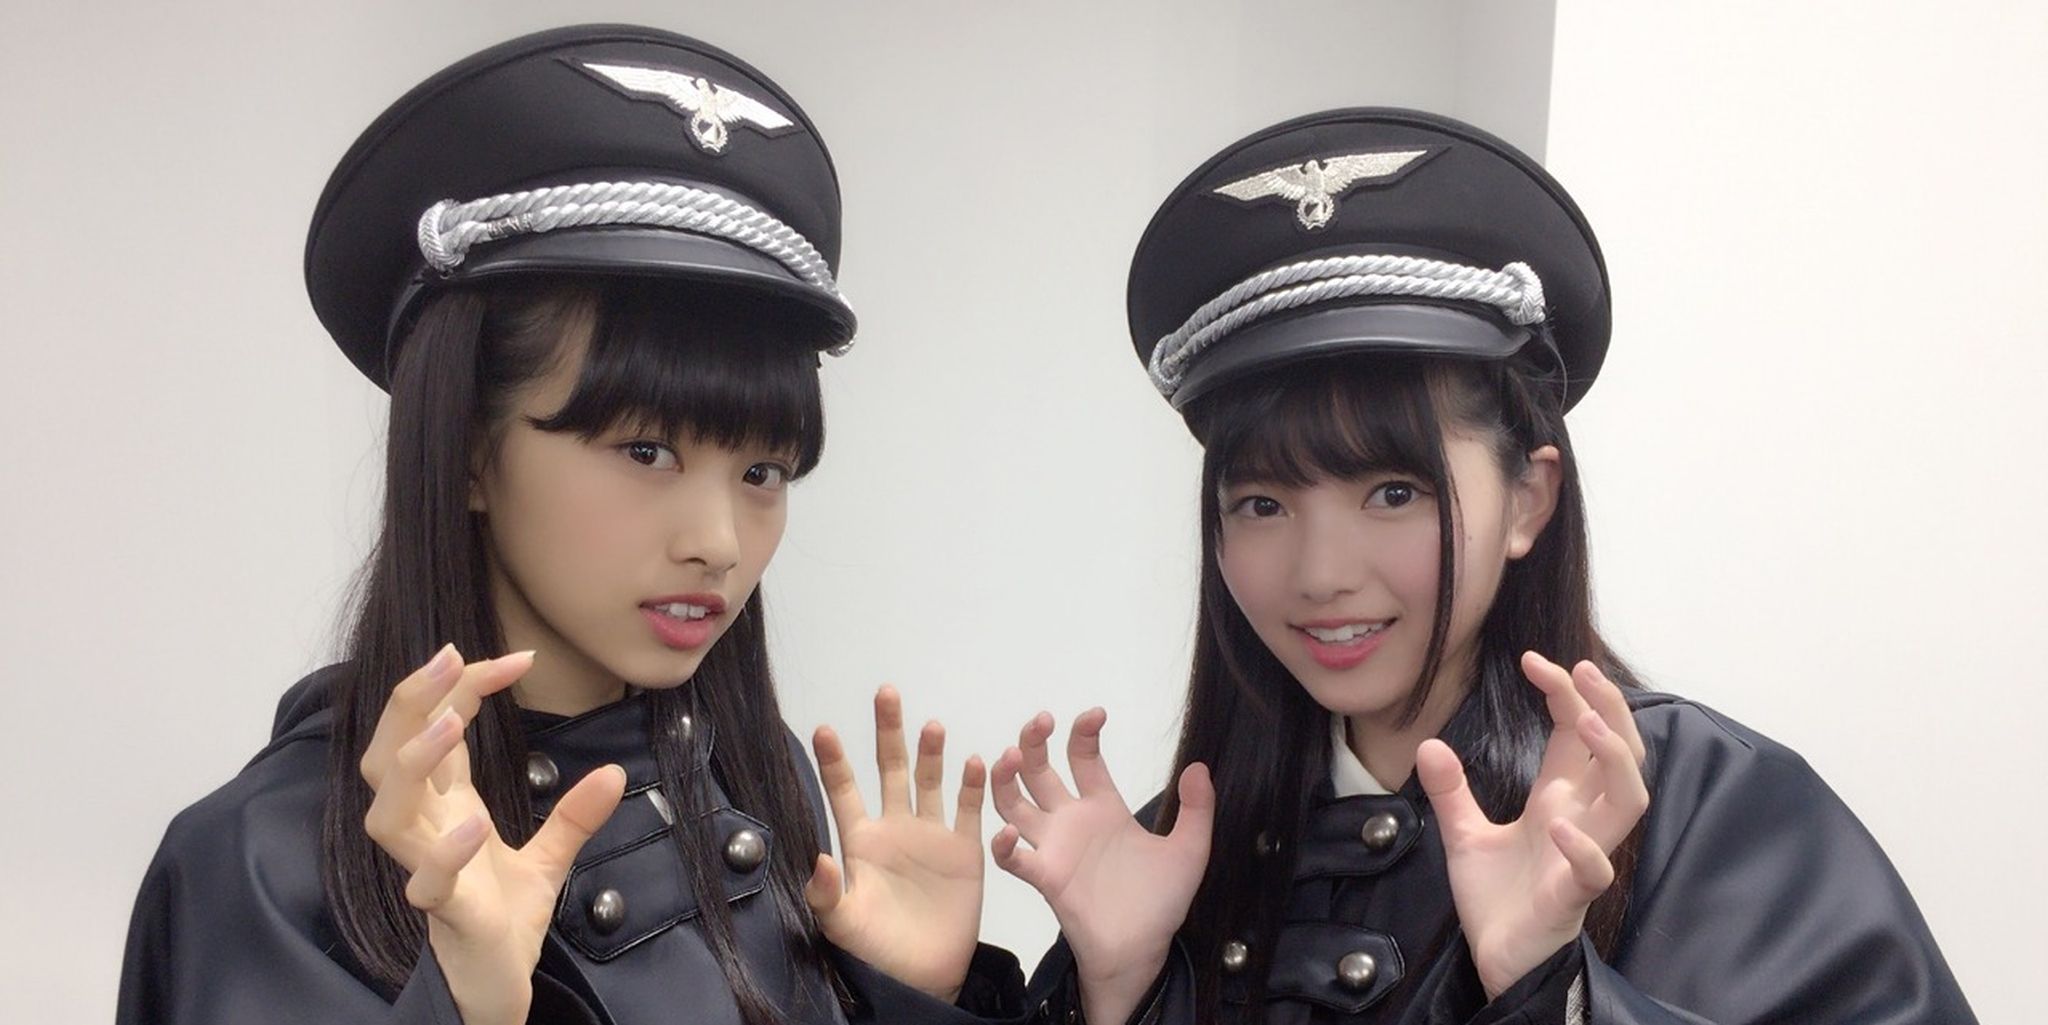 ‘Nazi’ costume row over Japanese girl band